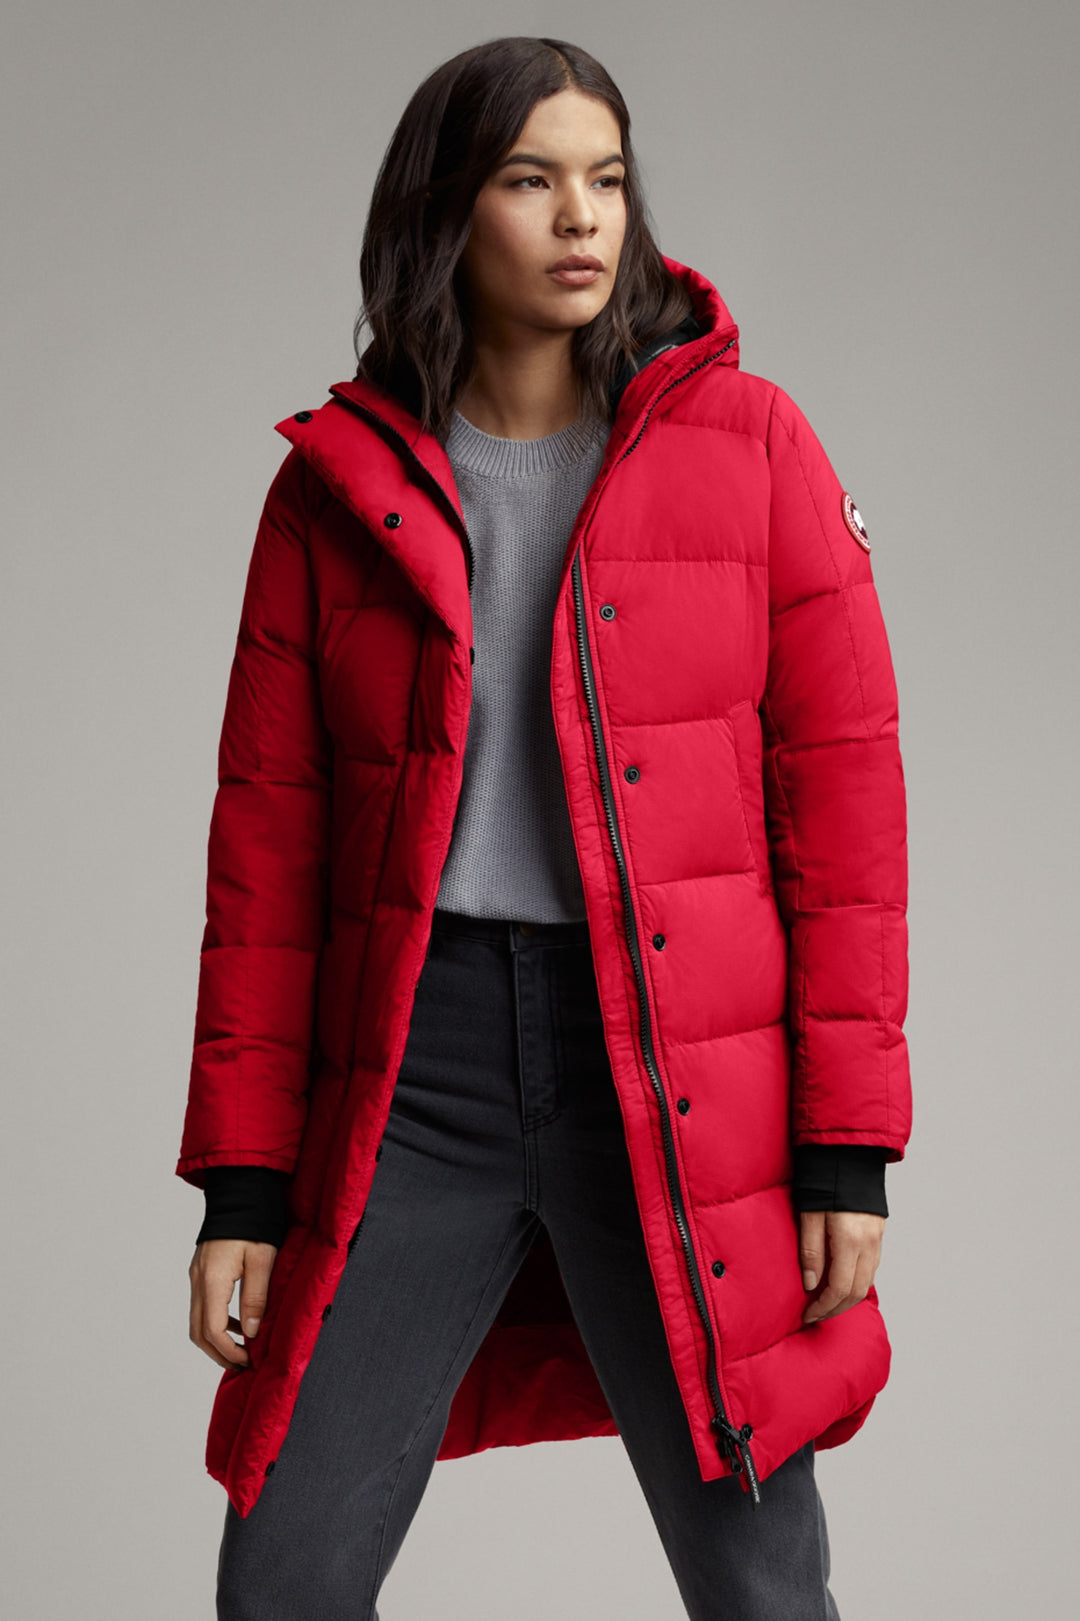 Buy Long Coat Designs For Women Online Shopping at